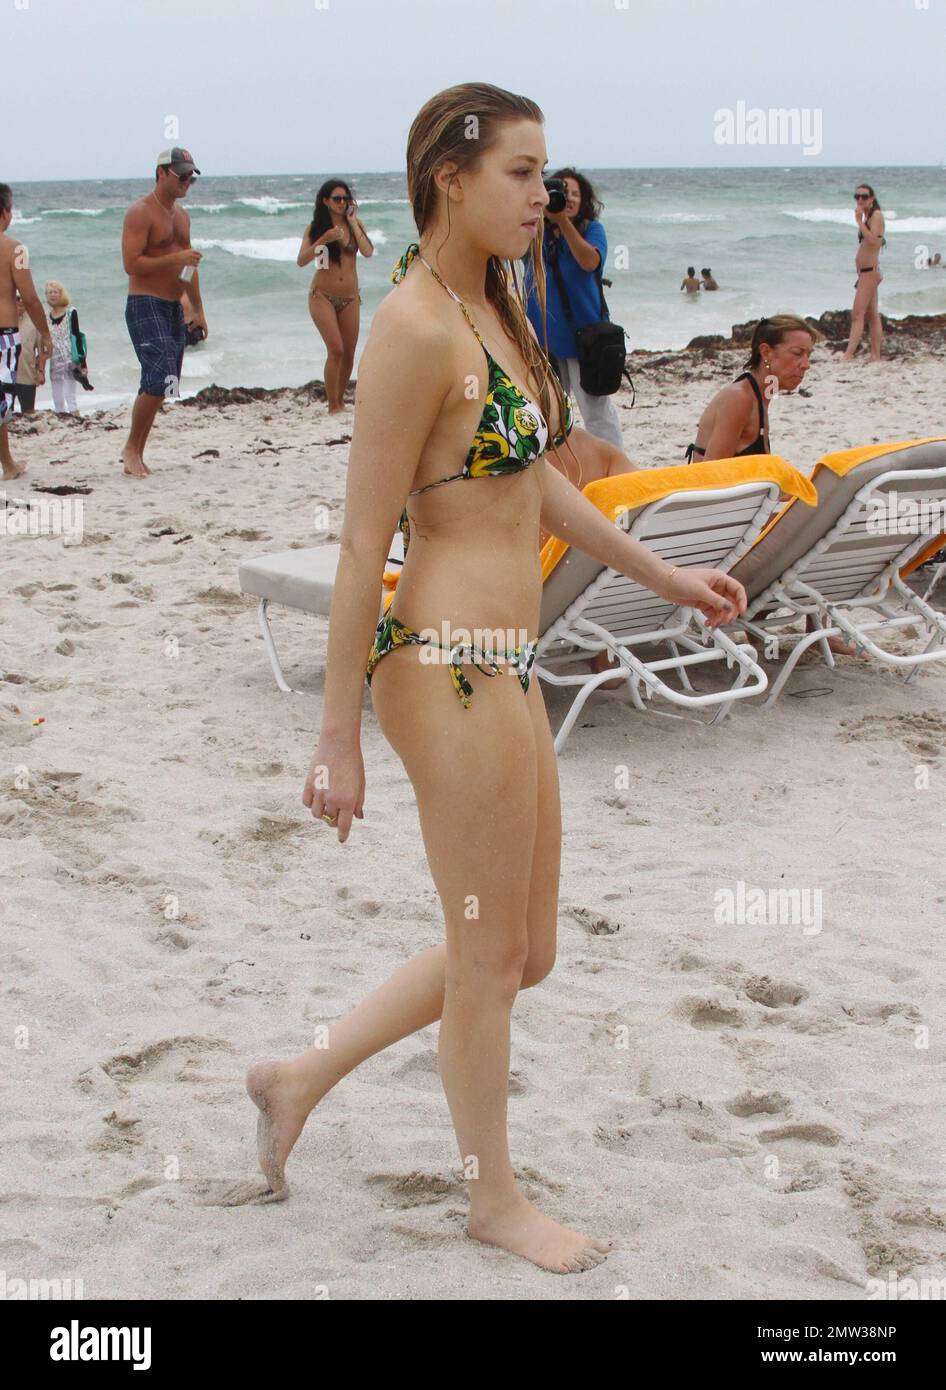 Miami bikini beach hi-res stock photography and images - Page 91 - Alamy